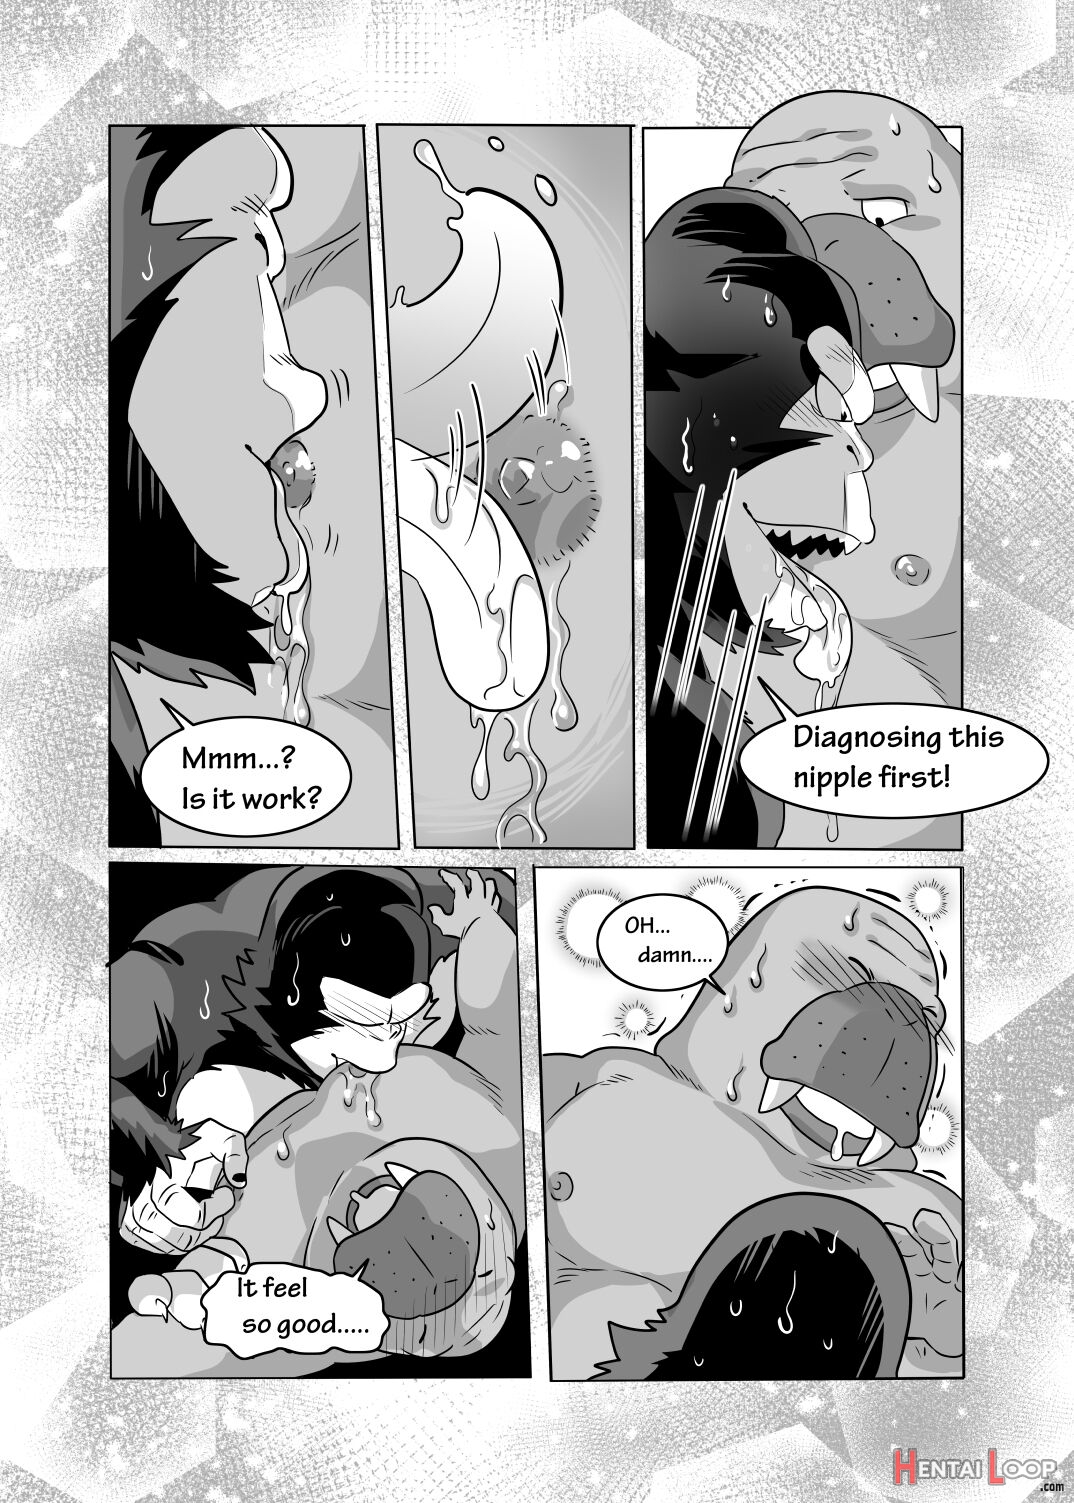 Odd Despense page 8